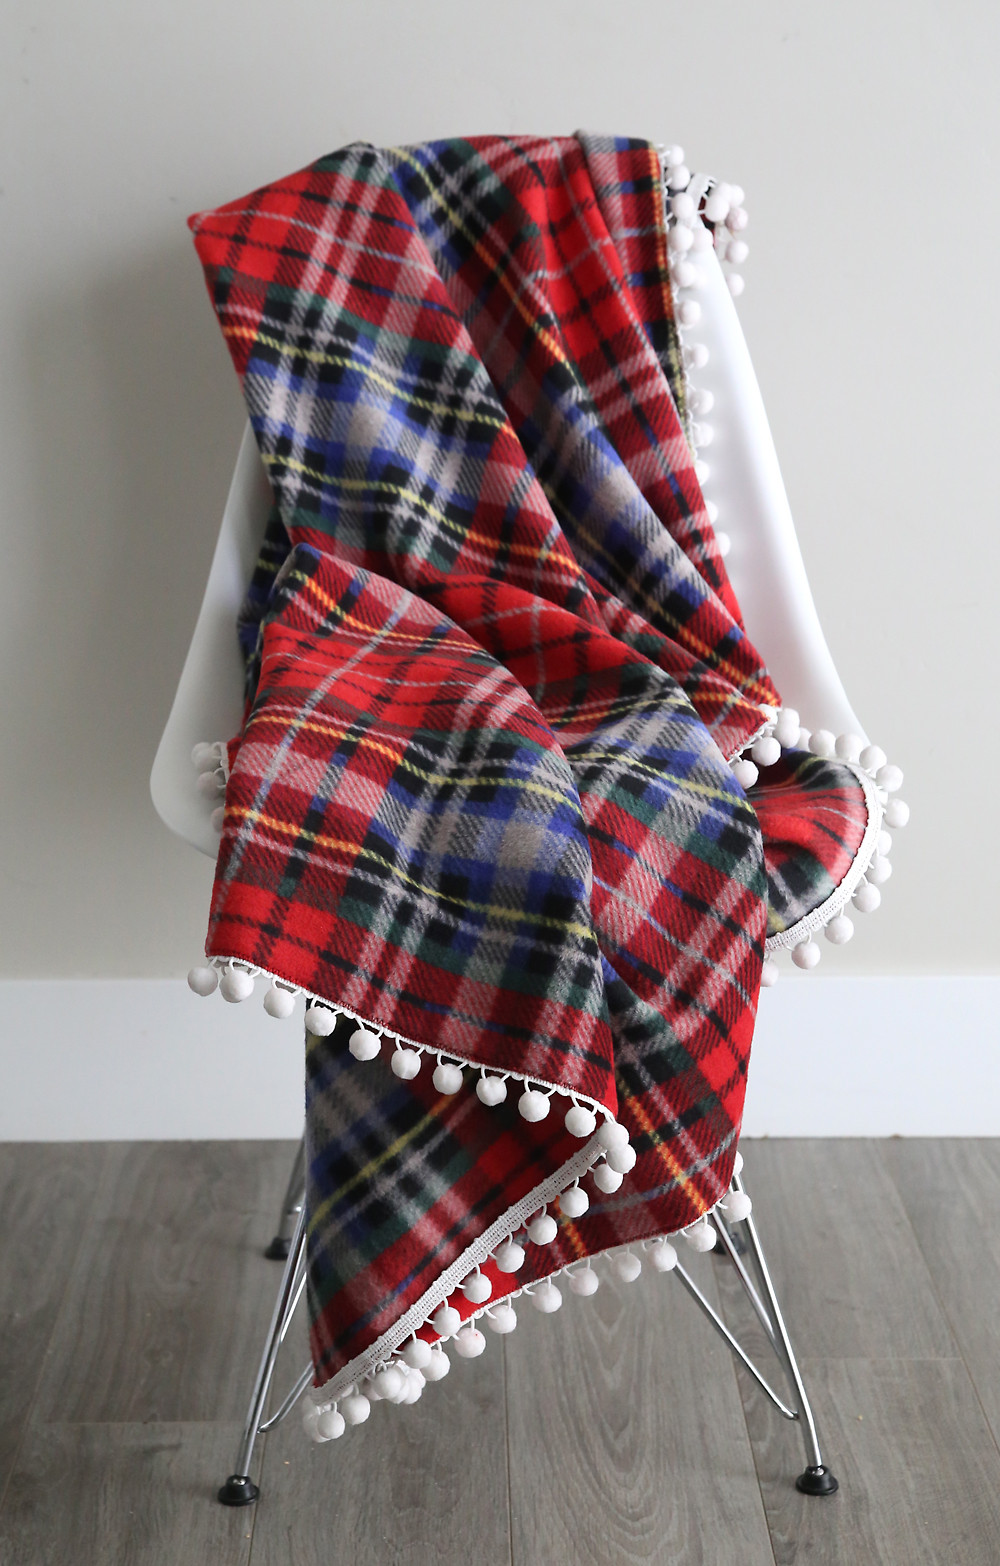 Best ideas about DIY Fleece Blanket
. Save or Pin easy & beautiful DIY fleece blankets It s Always Autumn Now.